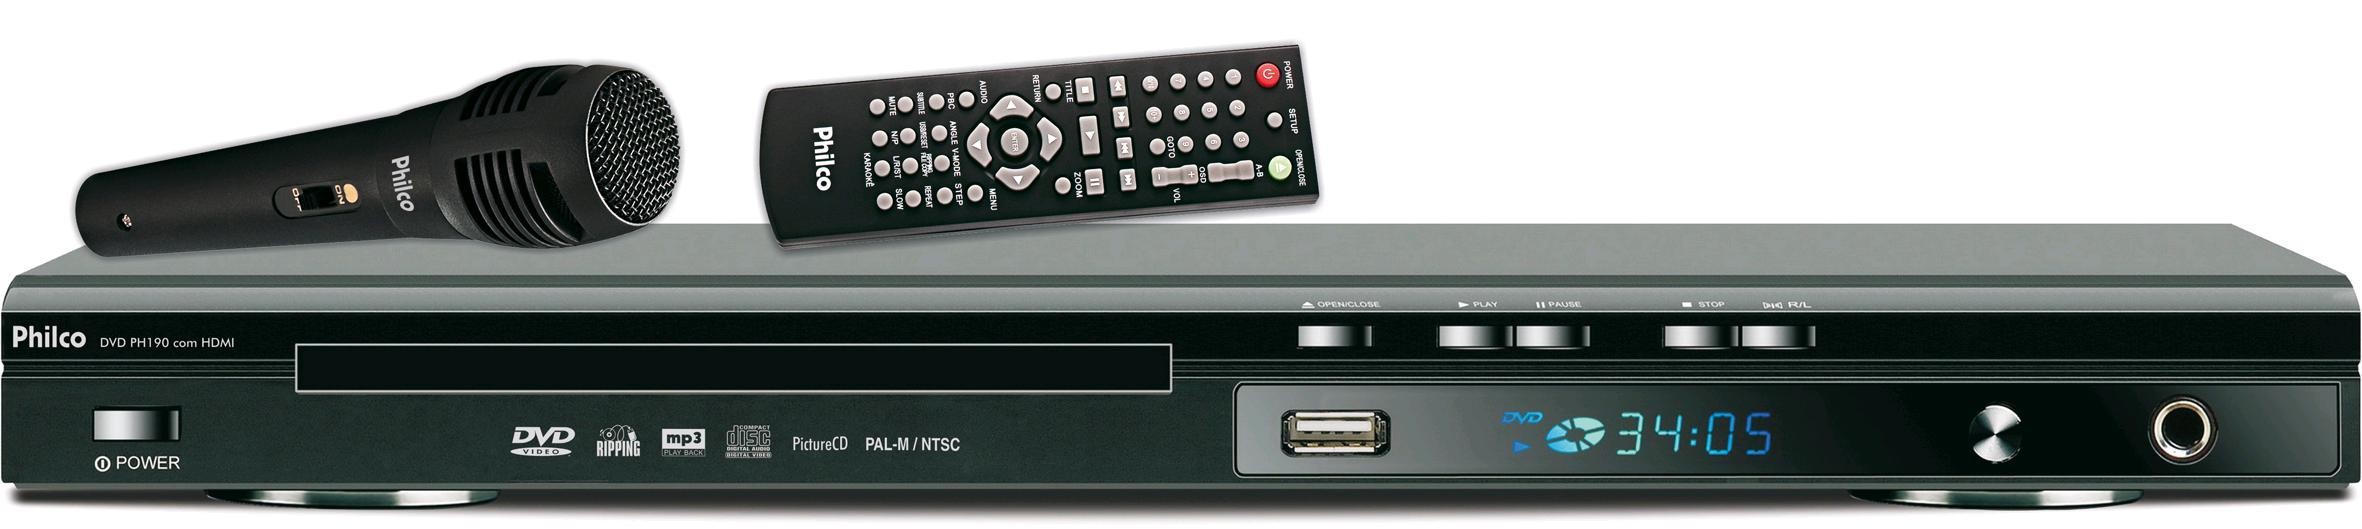 DVD PLAYER COM KARAOKÊ HDMI PH190 - PHILCO